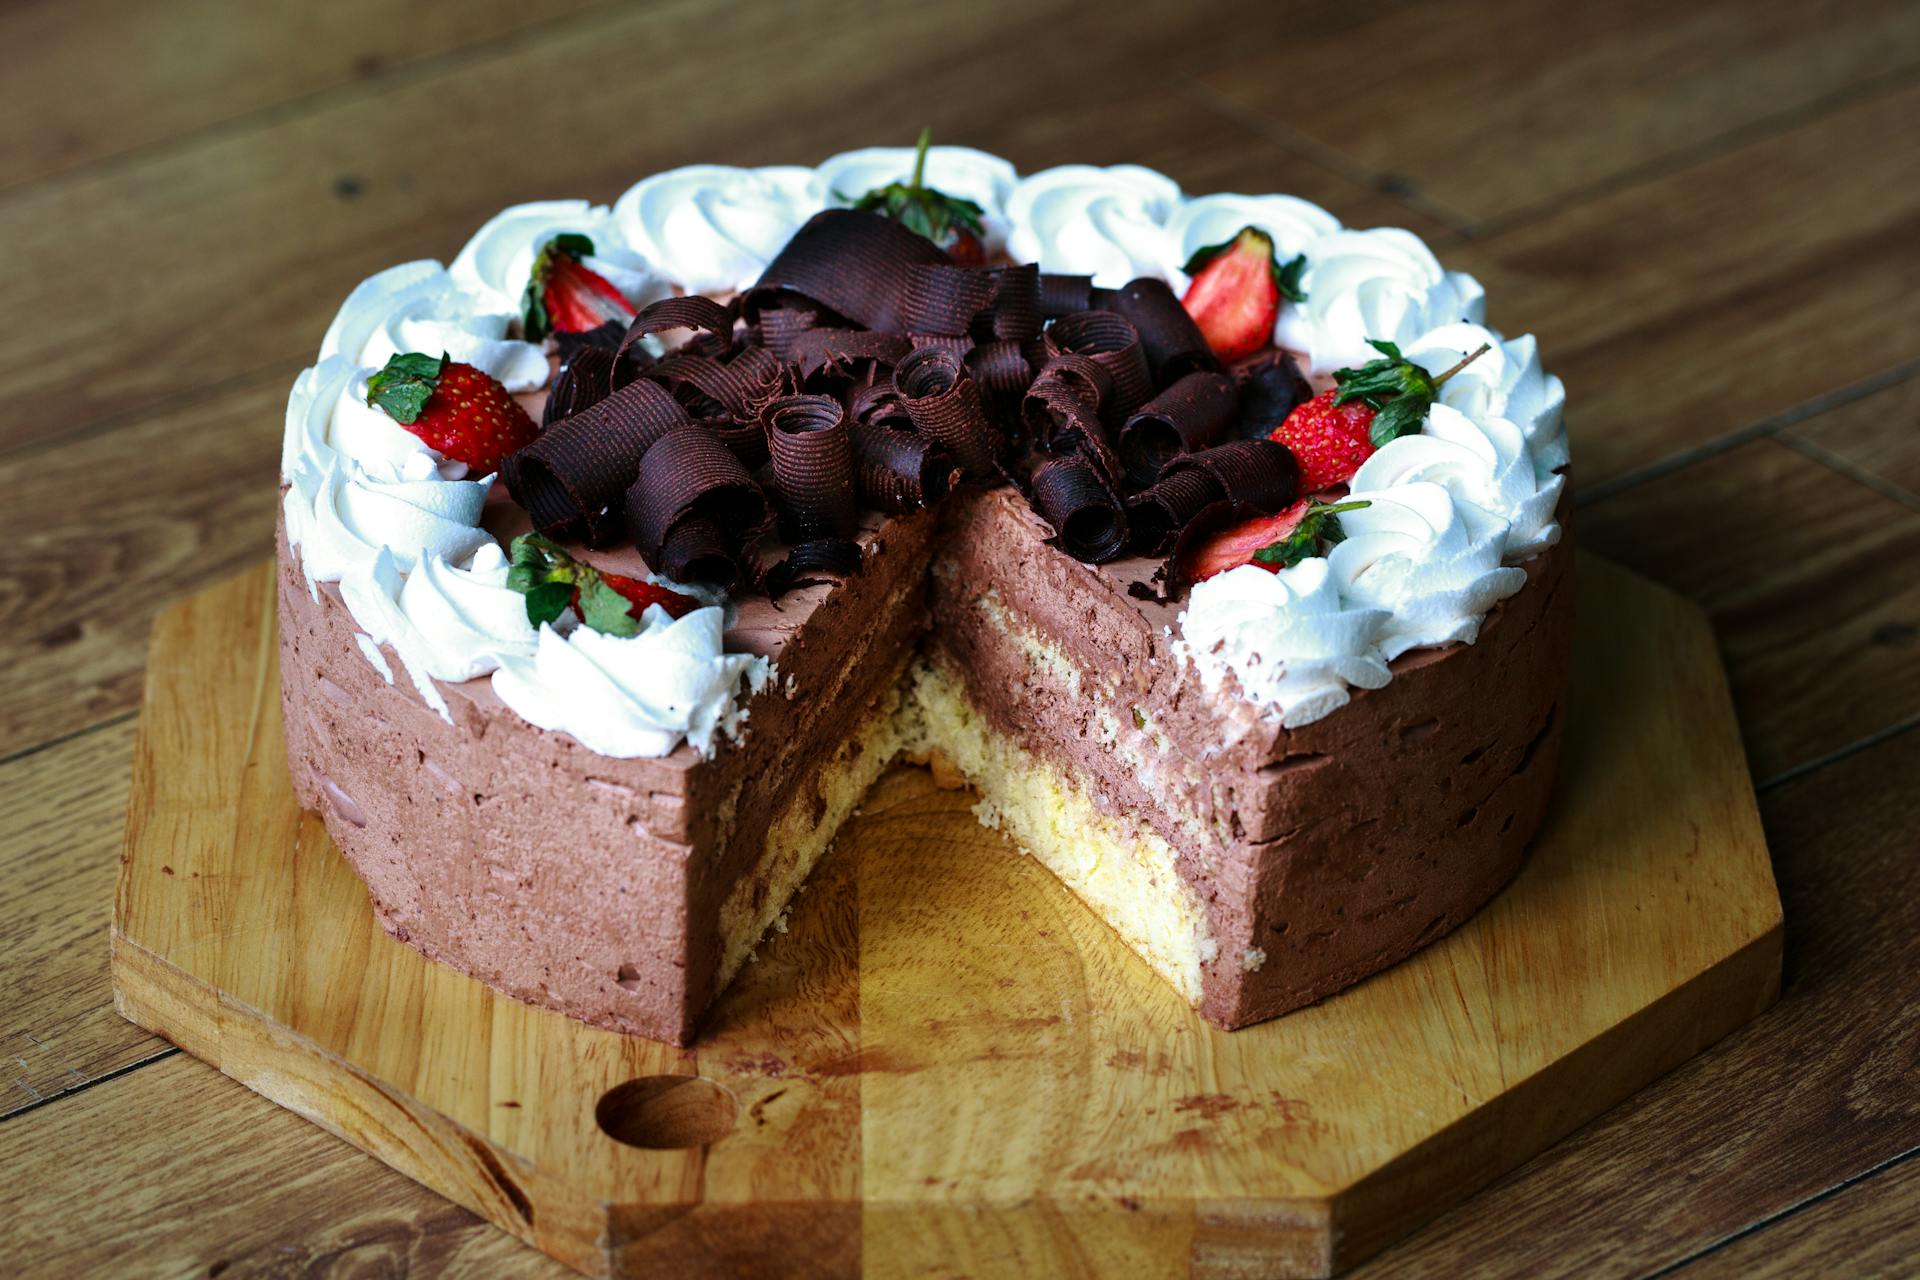 A decadent cake | Source: Pexels